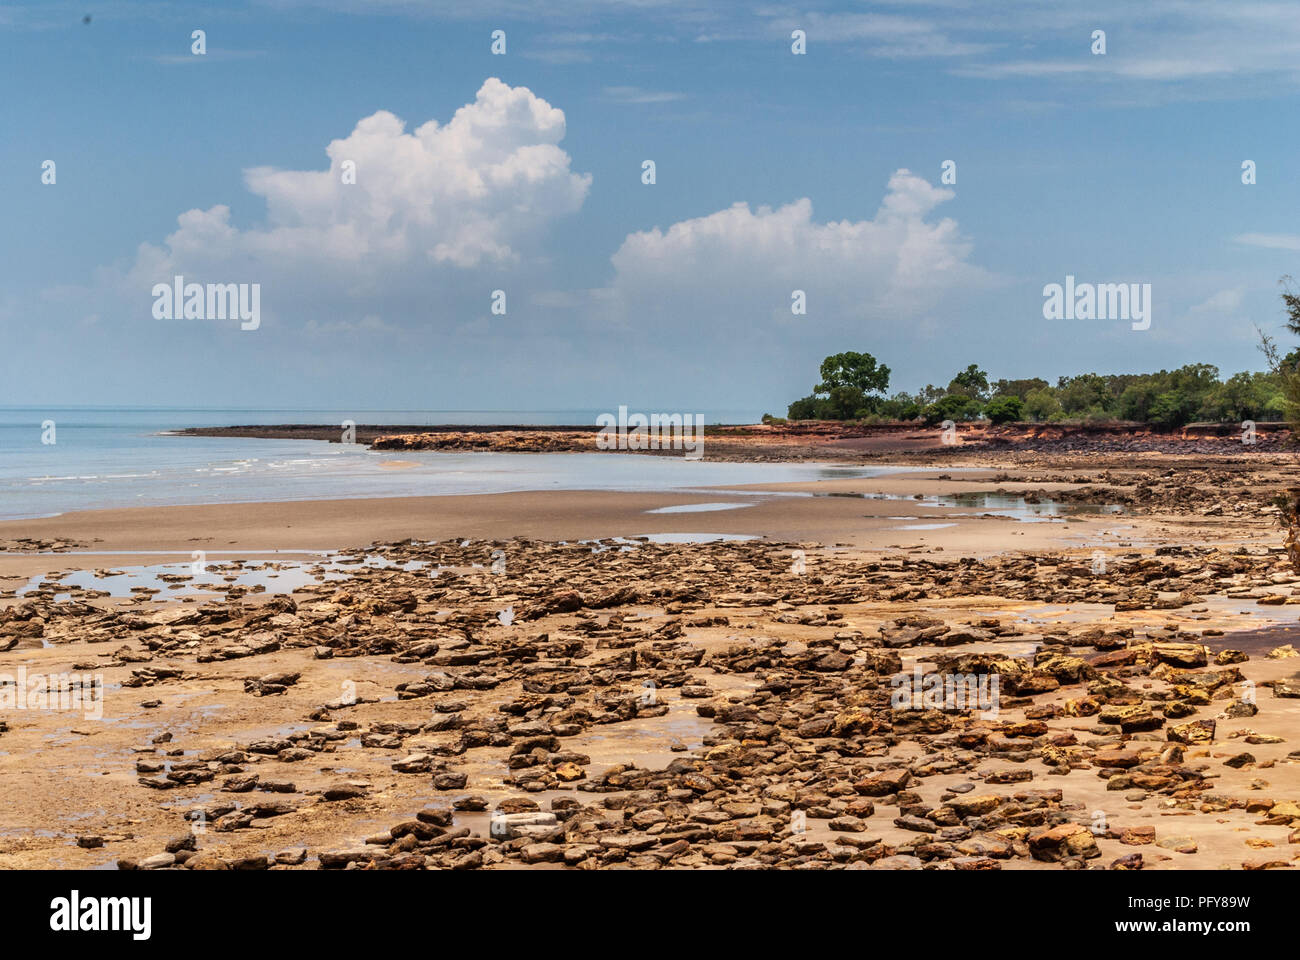 Darwin, Northen Territory, Australia - December 1, 2009: Landscape of shore line of Timor Sea shows rocky sandy beach with line of green vegetation di Stock Photo